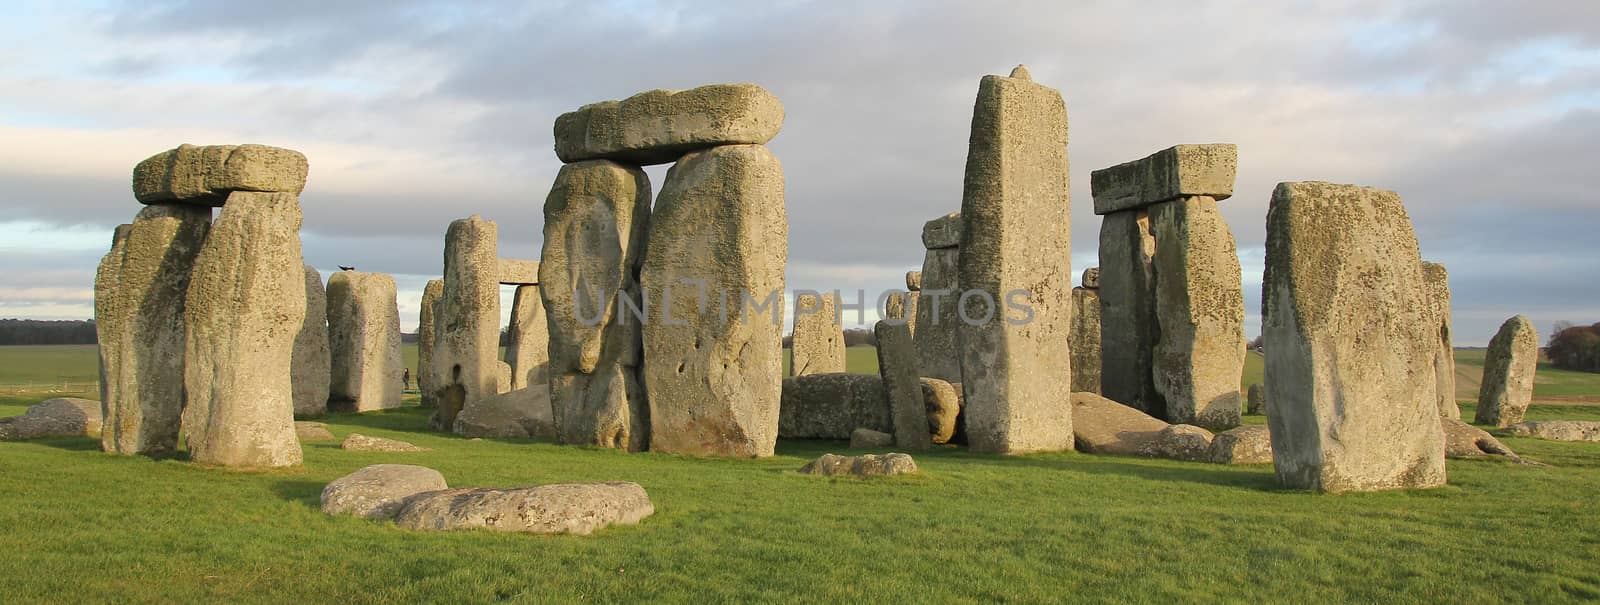 Stonehenge, England. UK by pumppump